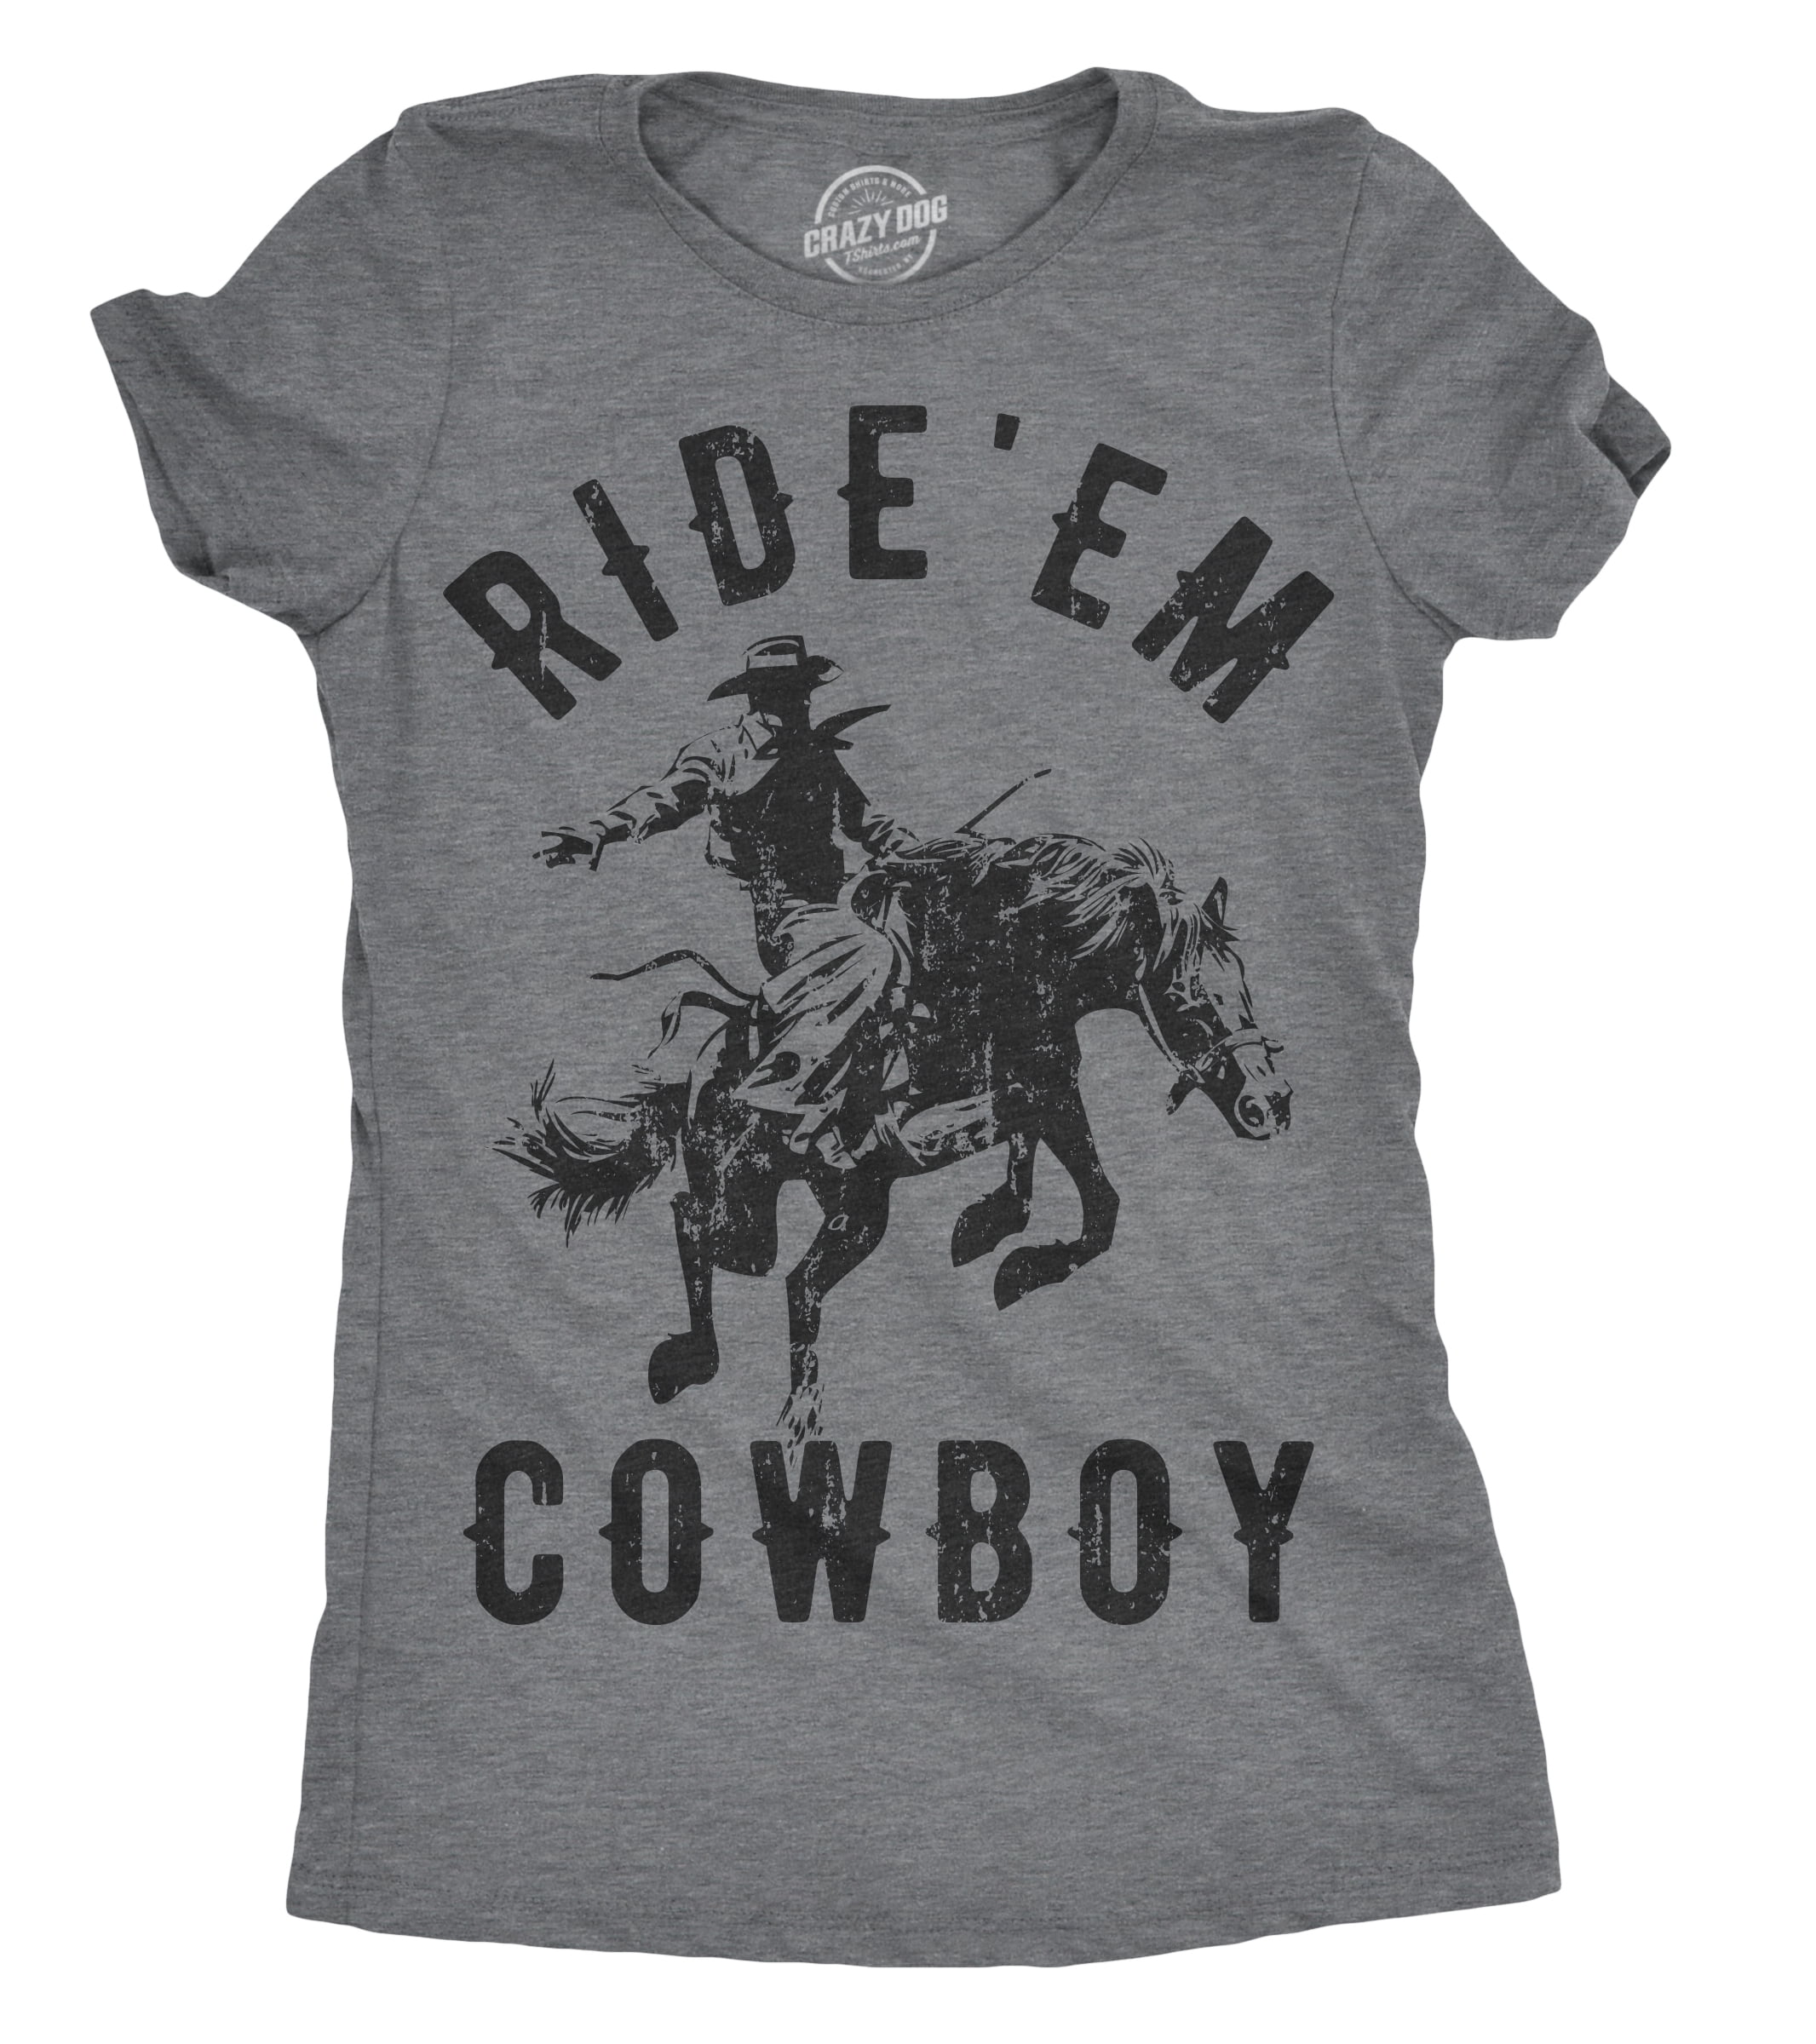 Rodeo Time T-Shirt Custom T-shirt Punchy Cowboy shirt Sublimation T-shirt Cute T-shirt